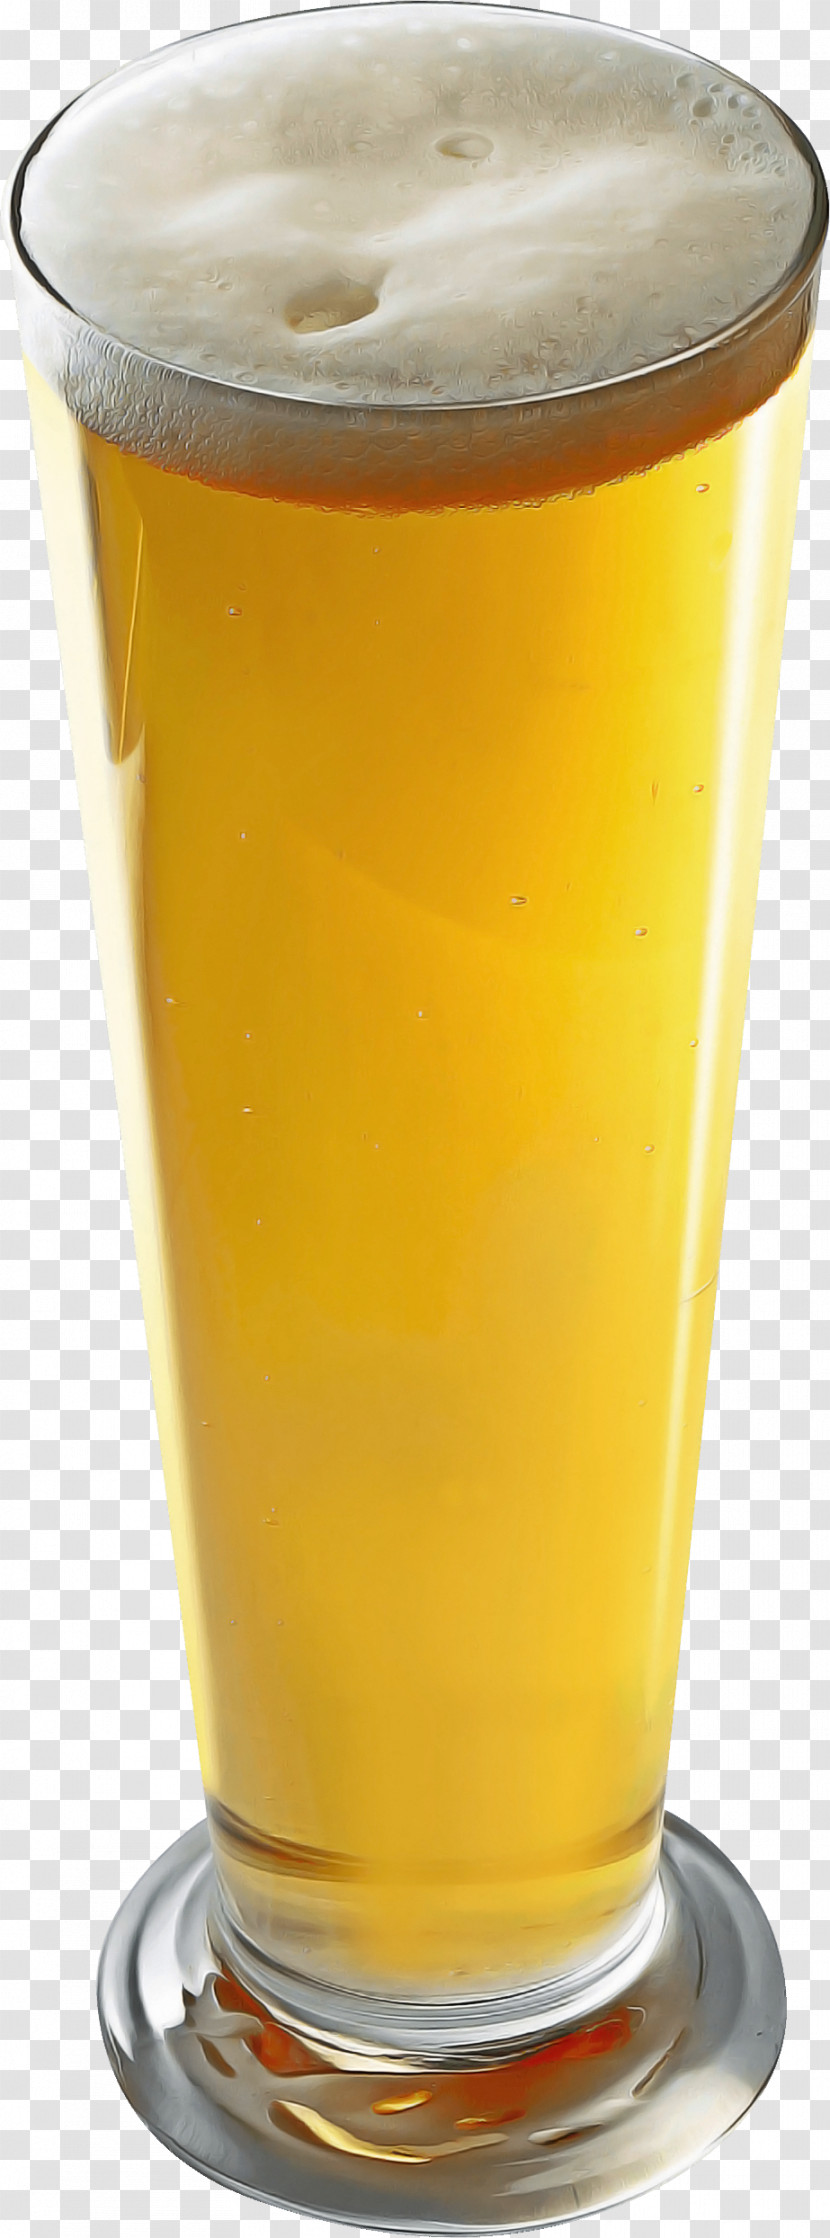 Yellow Pint Glass Drink Juice Harvey Wallbanger Transparent PNG